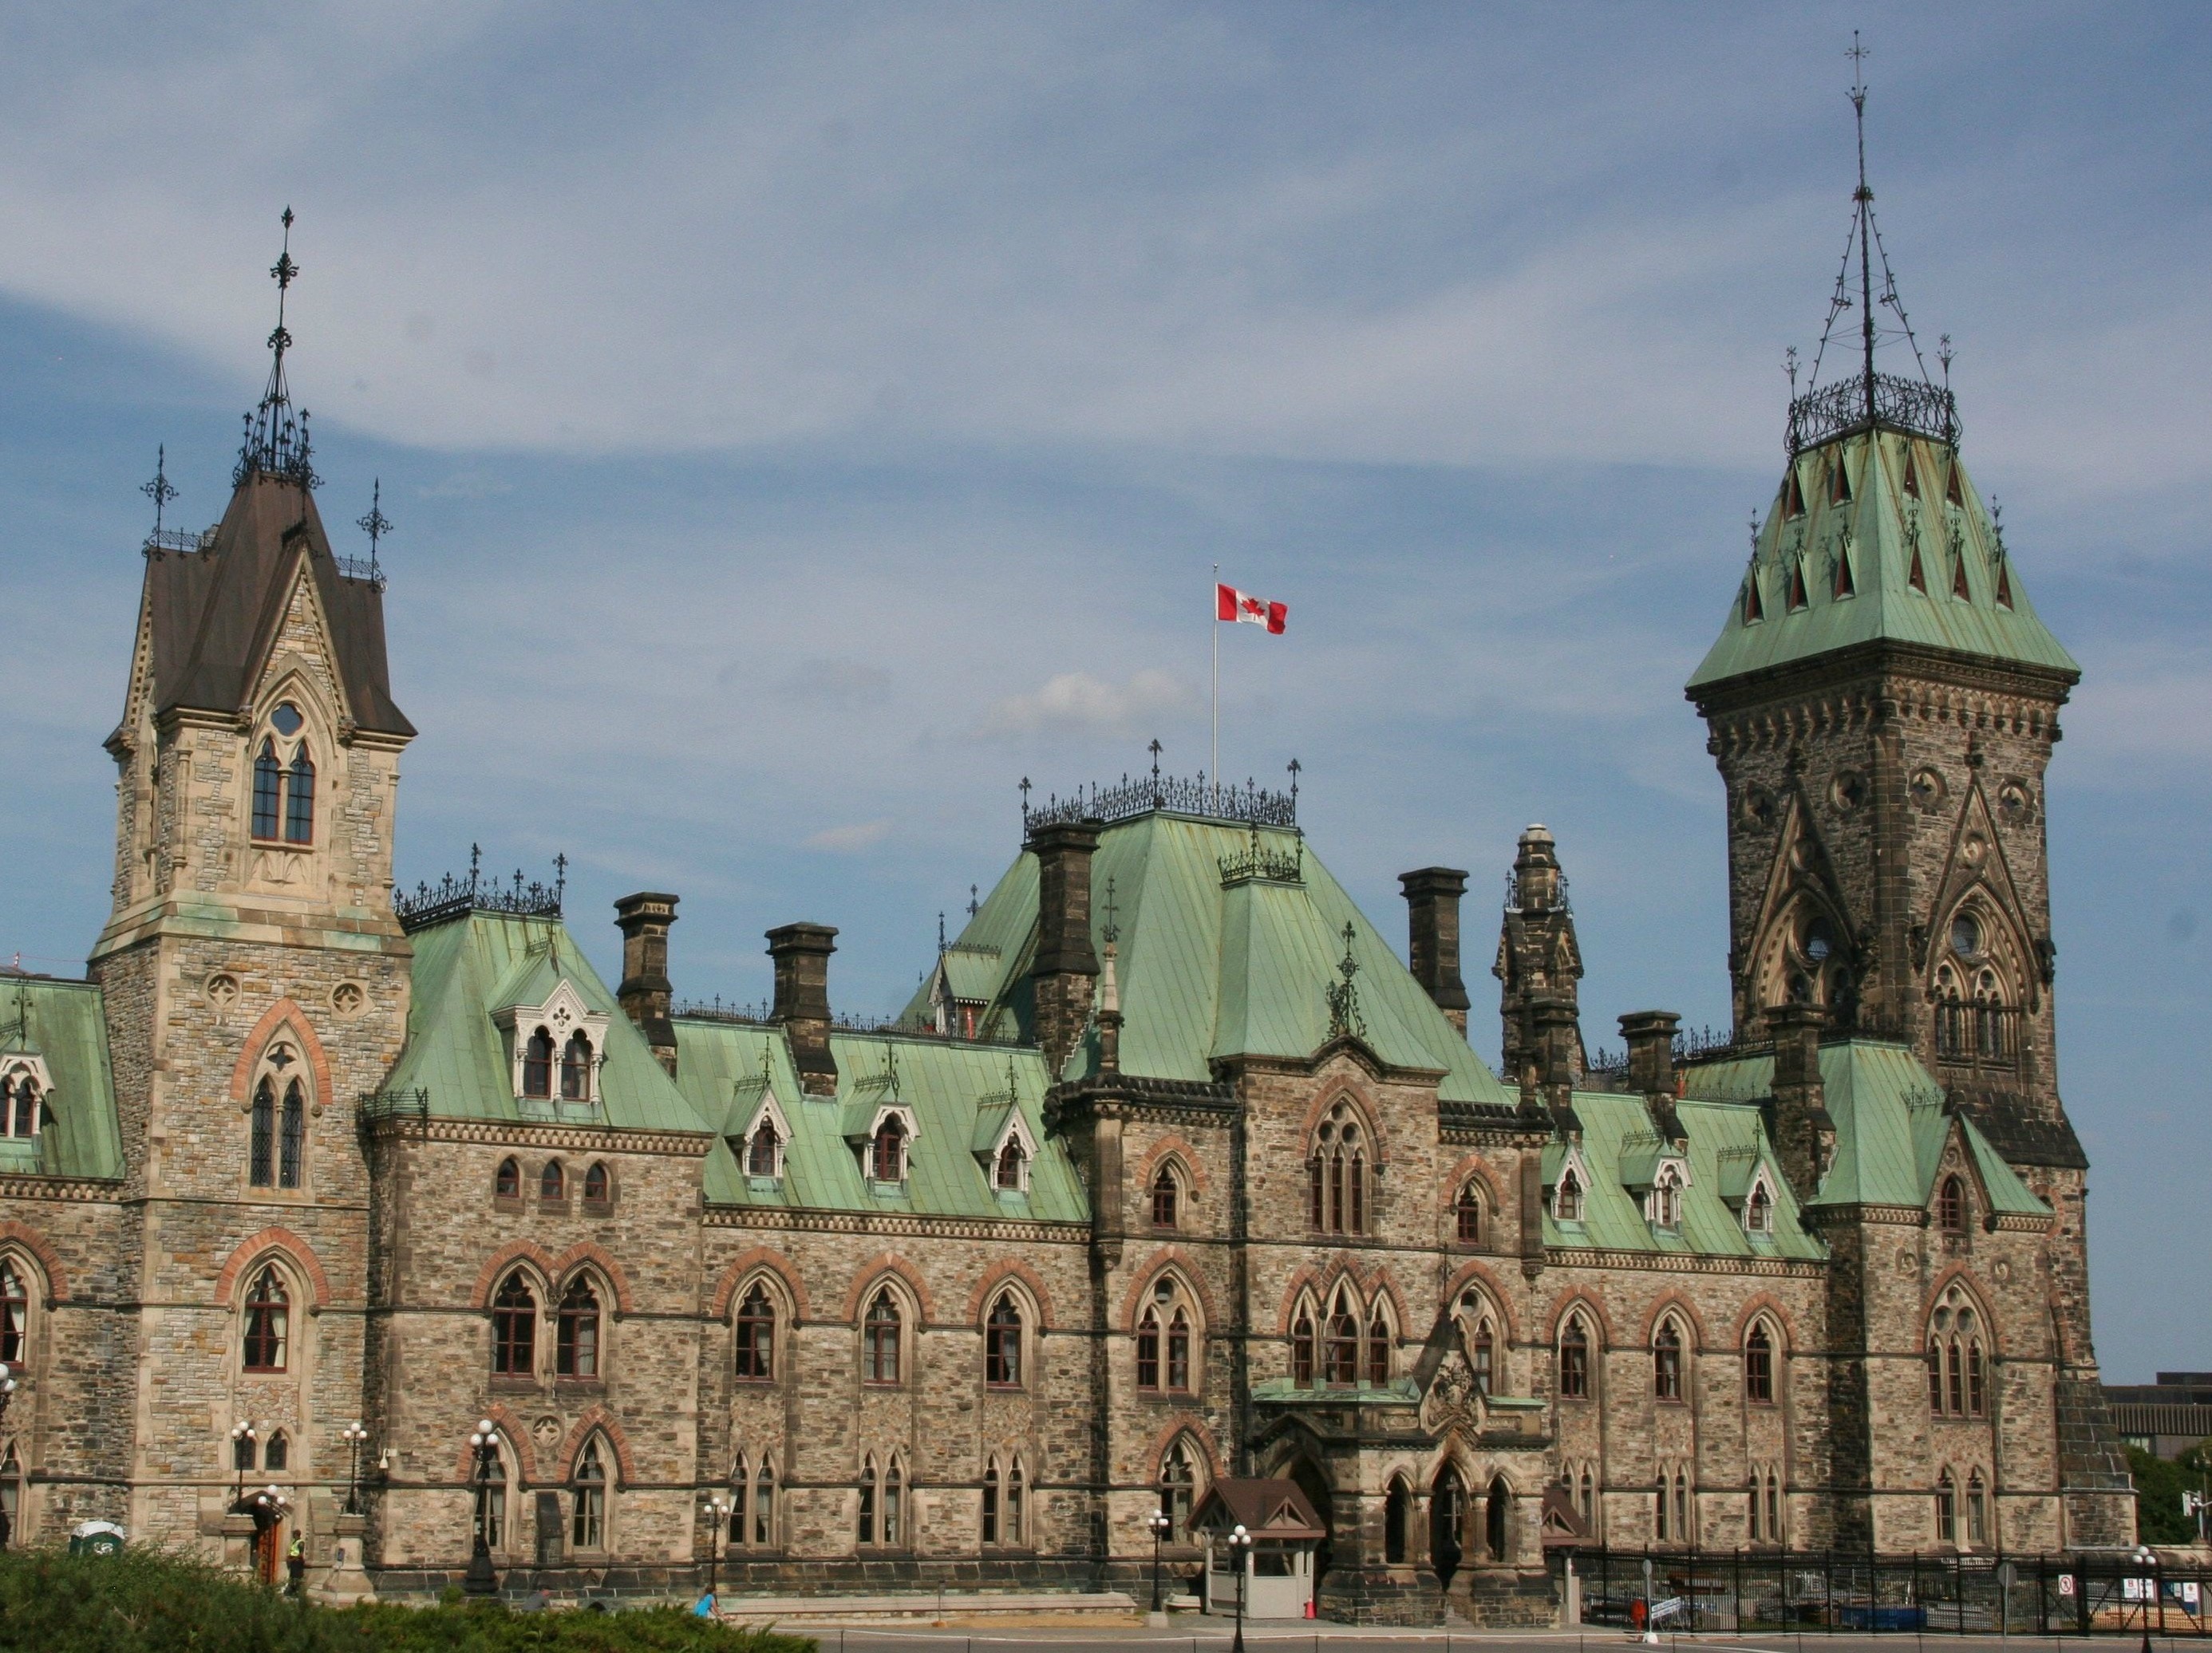 Canadian Parliament buildings